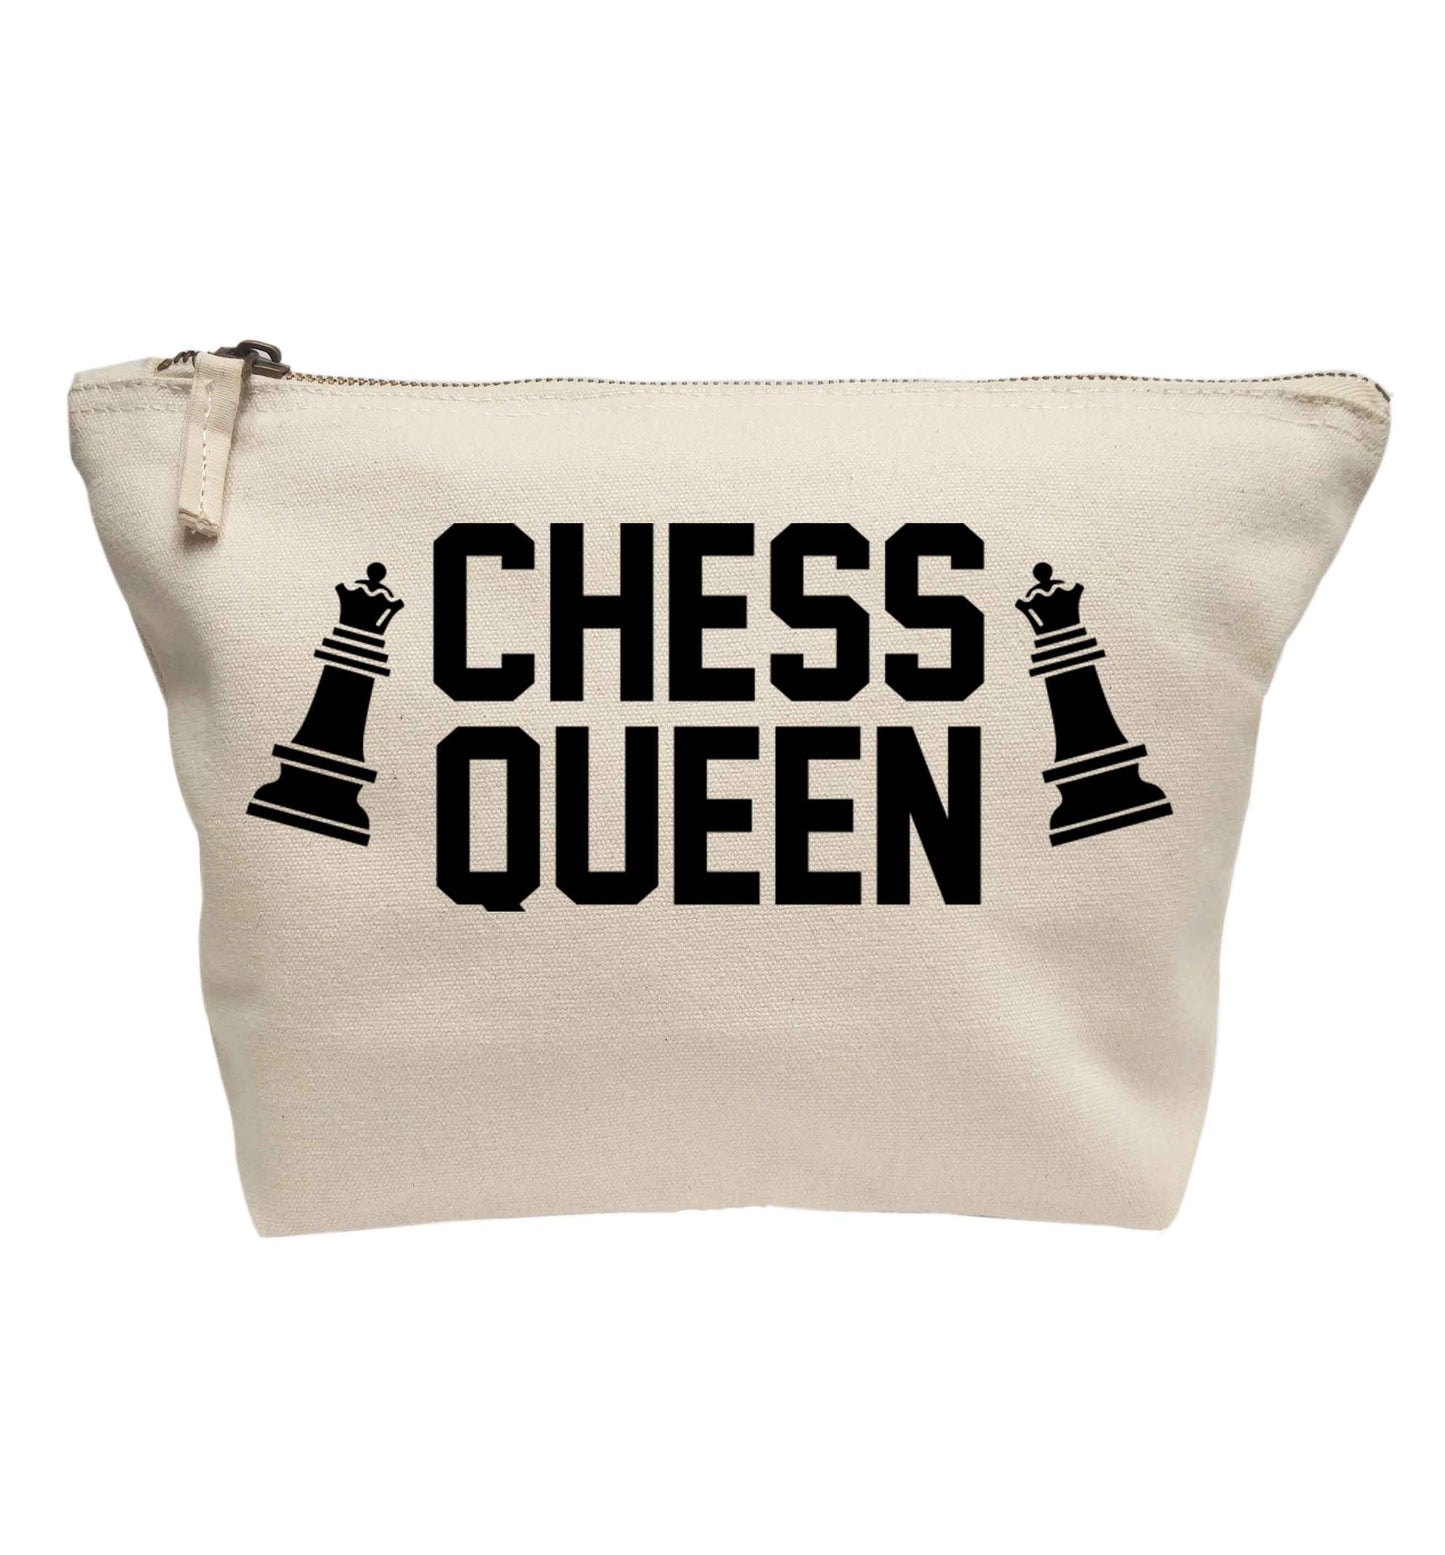 Chess queen | makeup / wash bag